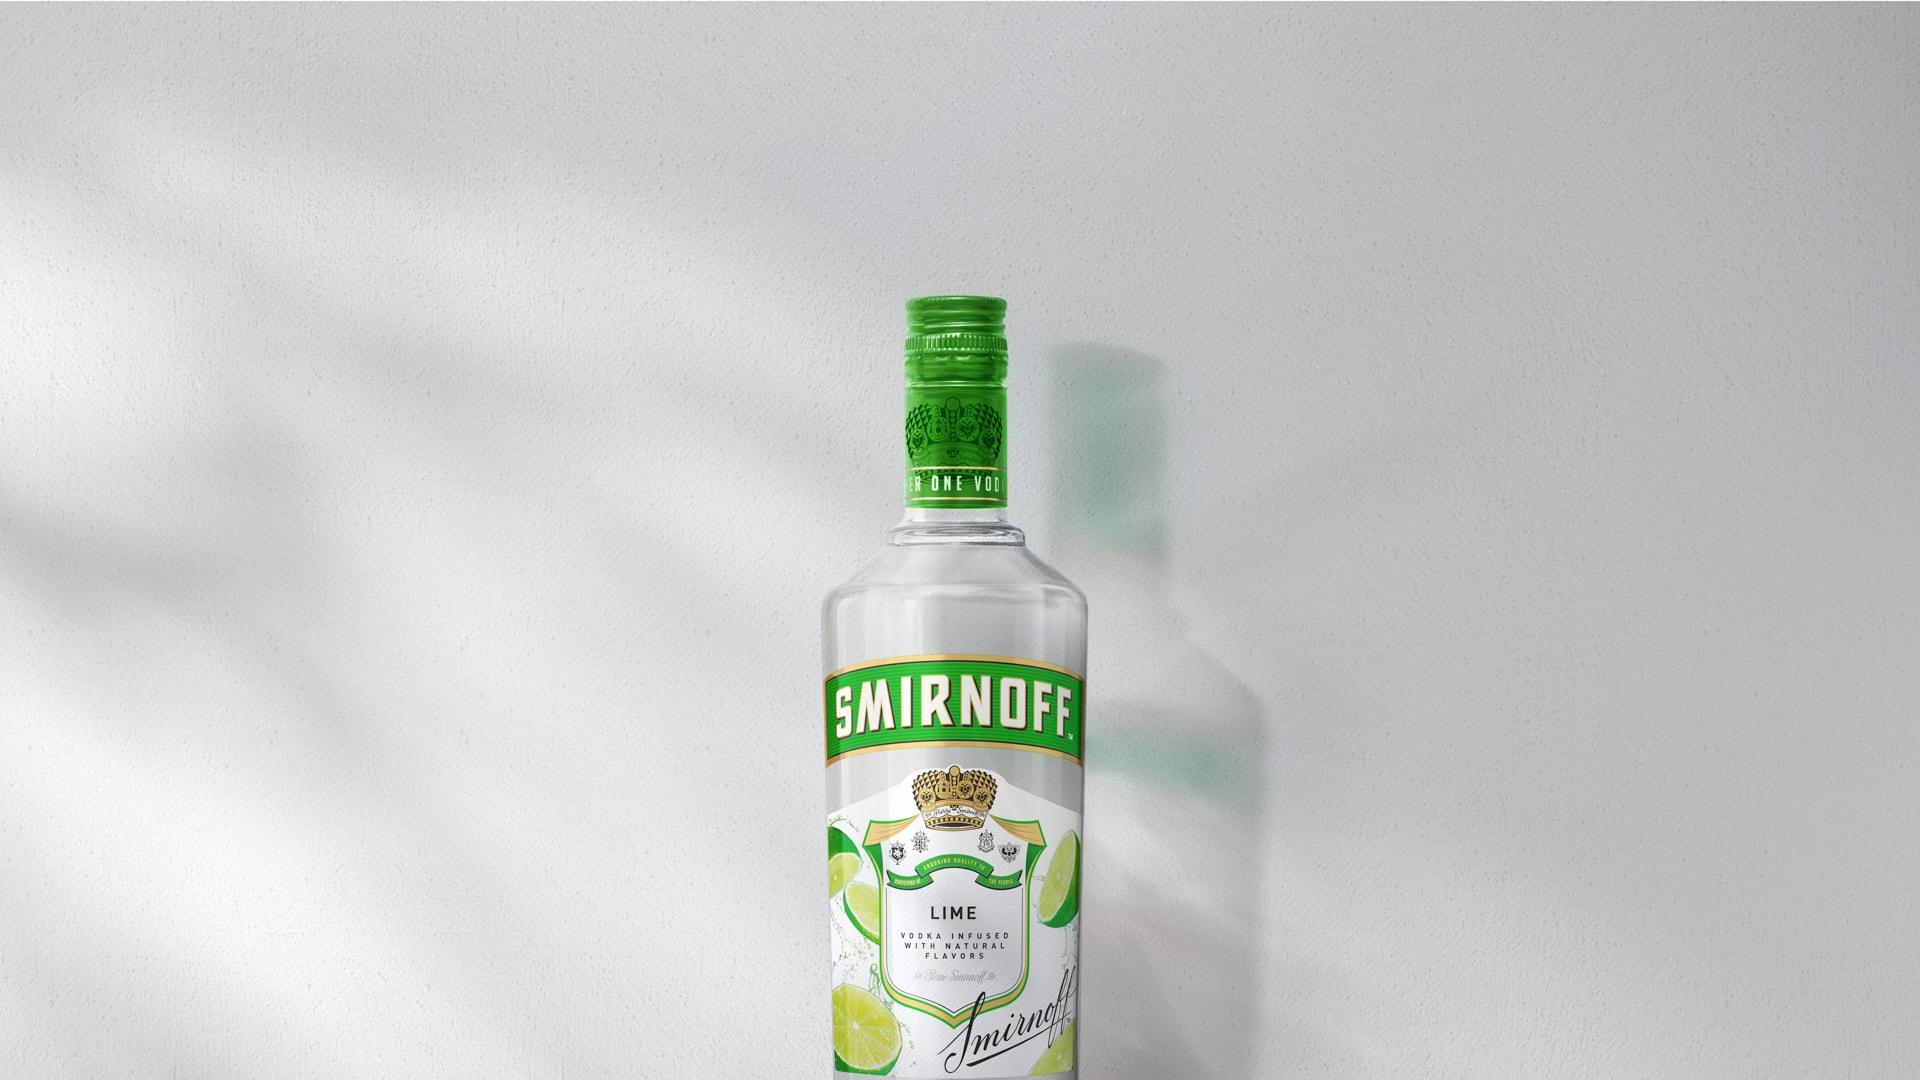 Smirnoff Lime on grey background